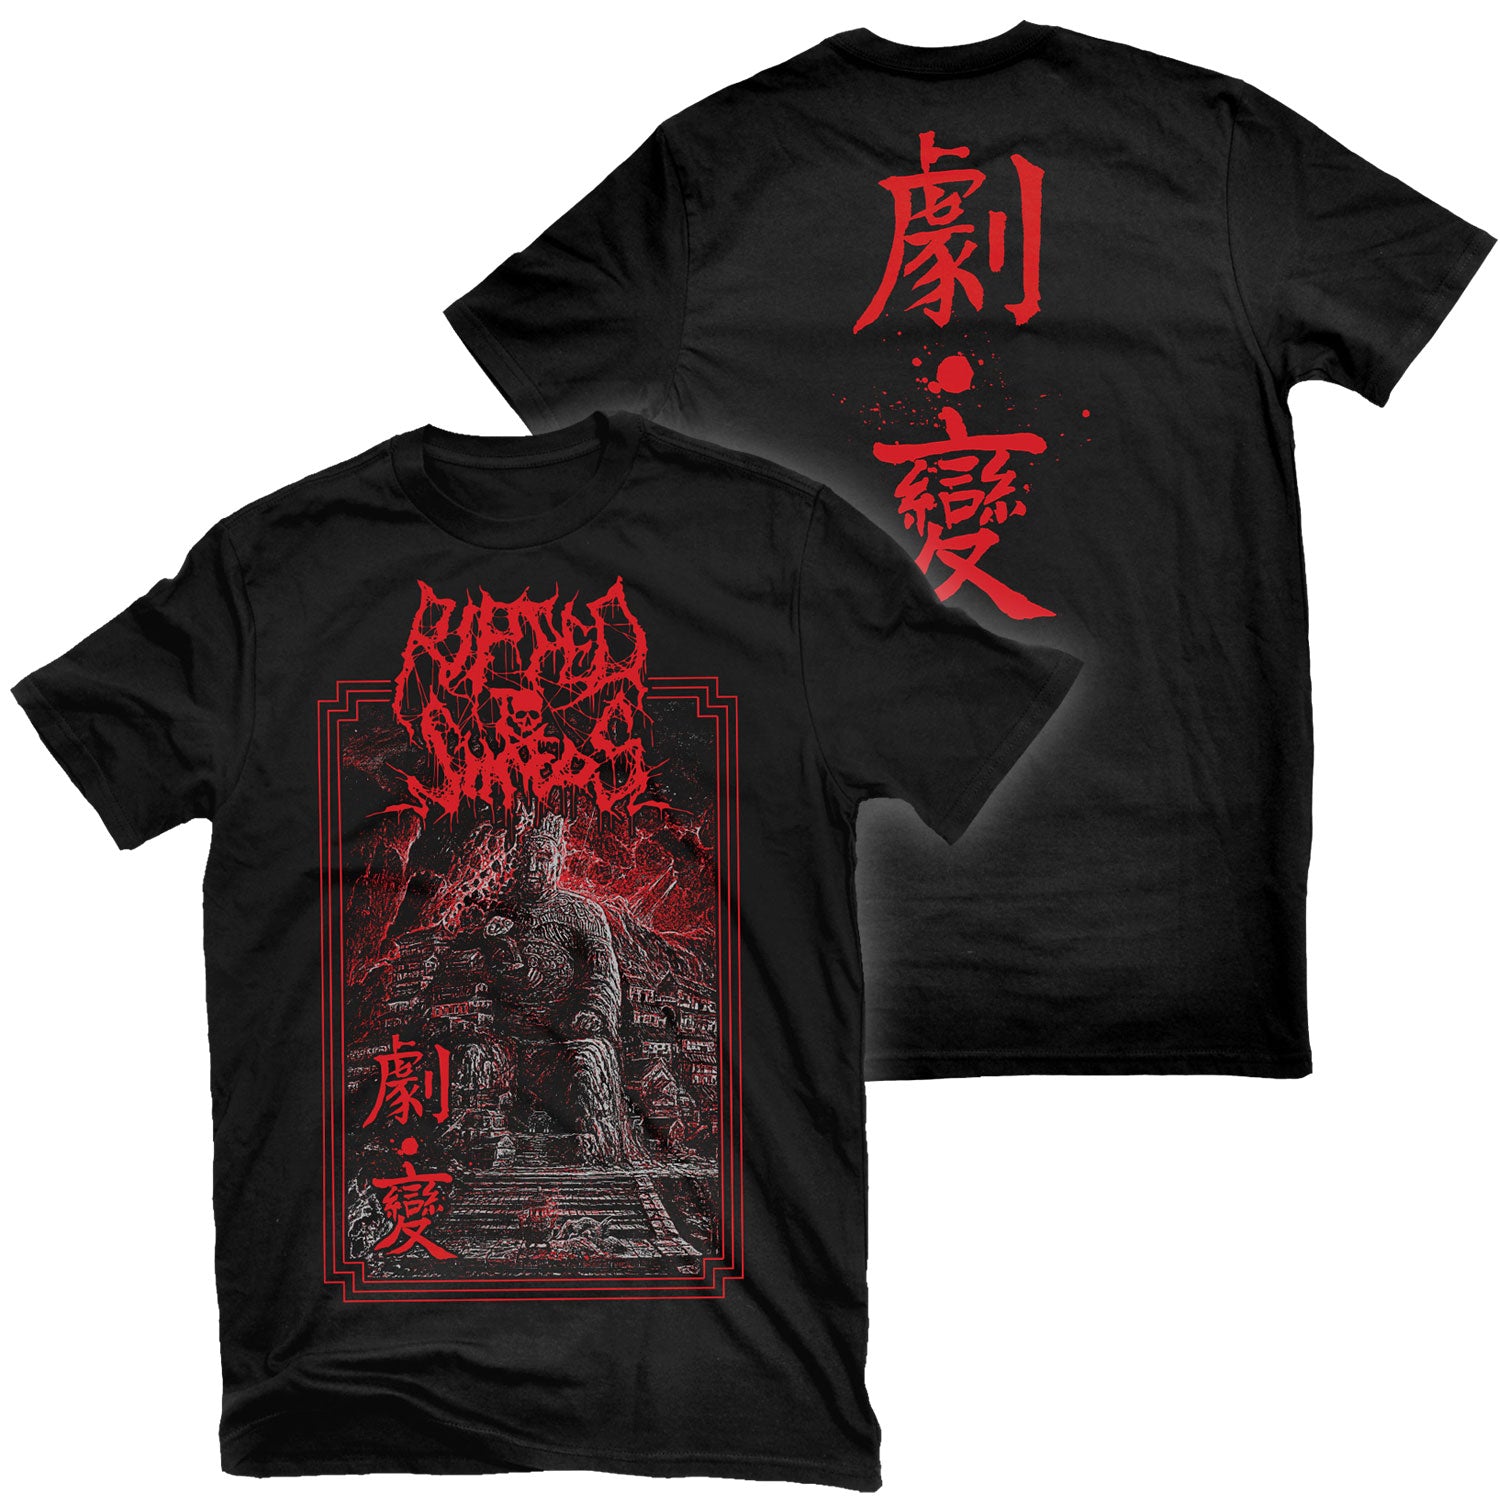 Ripped to Shreds "劇變 (Jubian)" T-Shirt